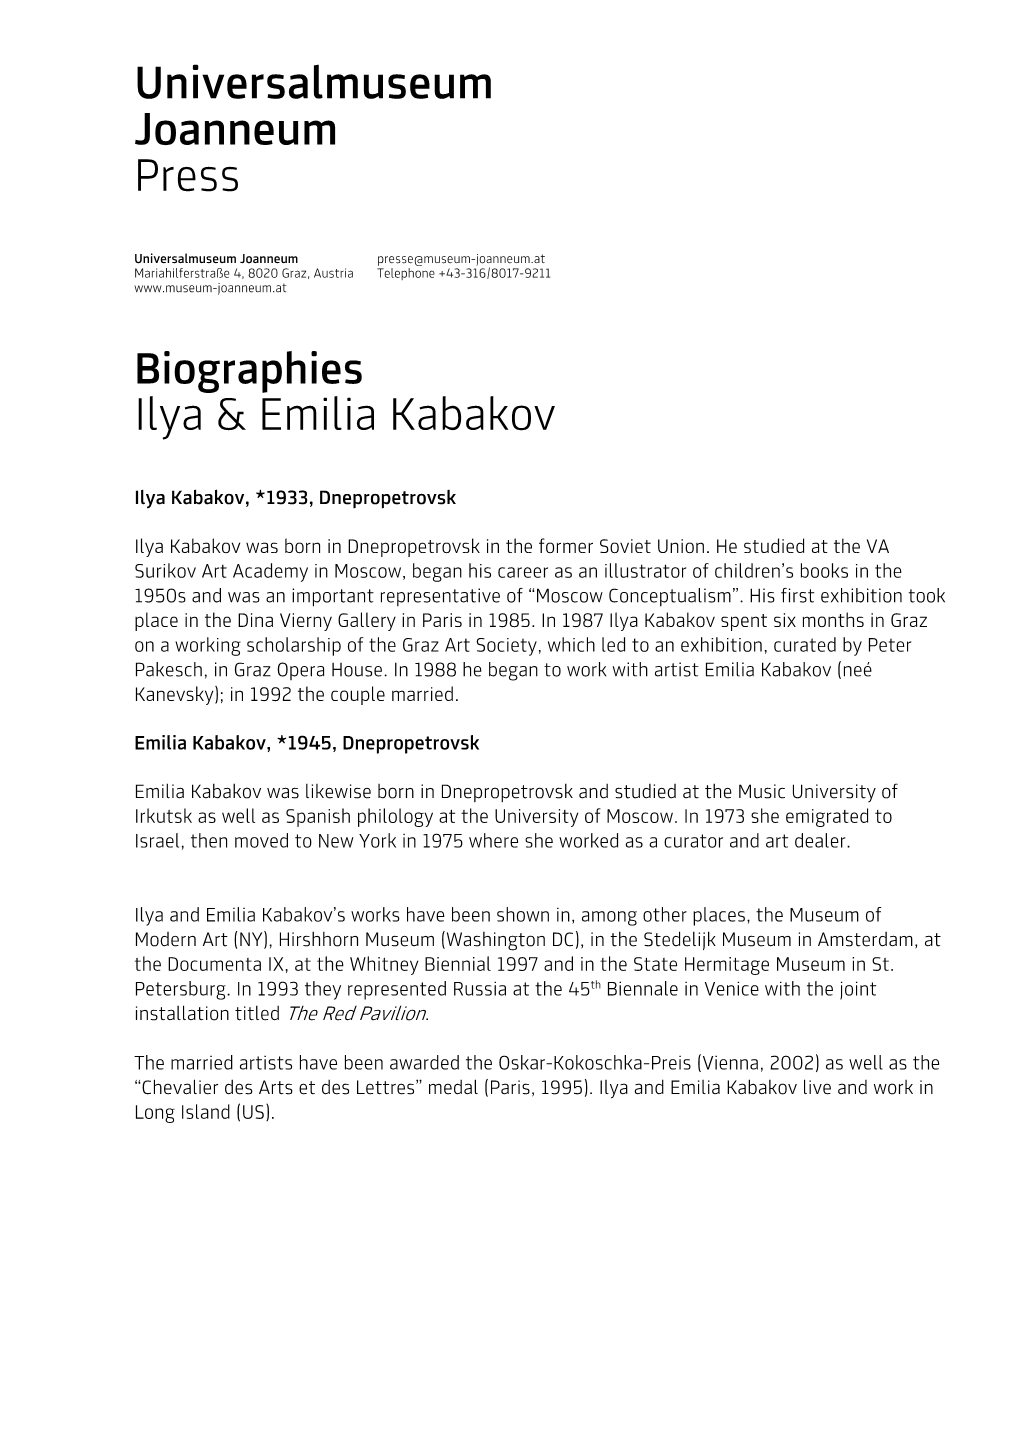 Biographies Ilya & Emilia Kabakovs